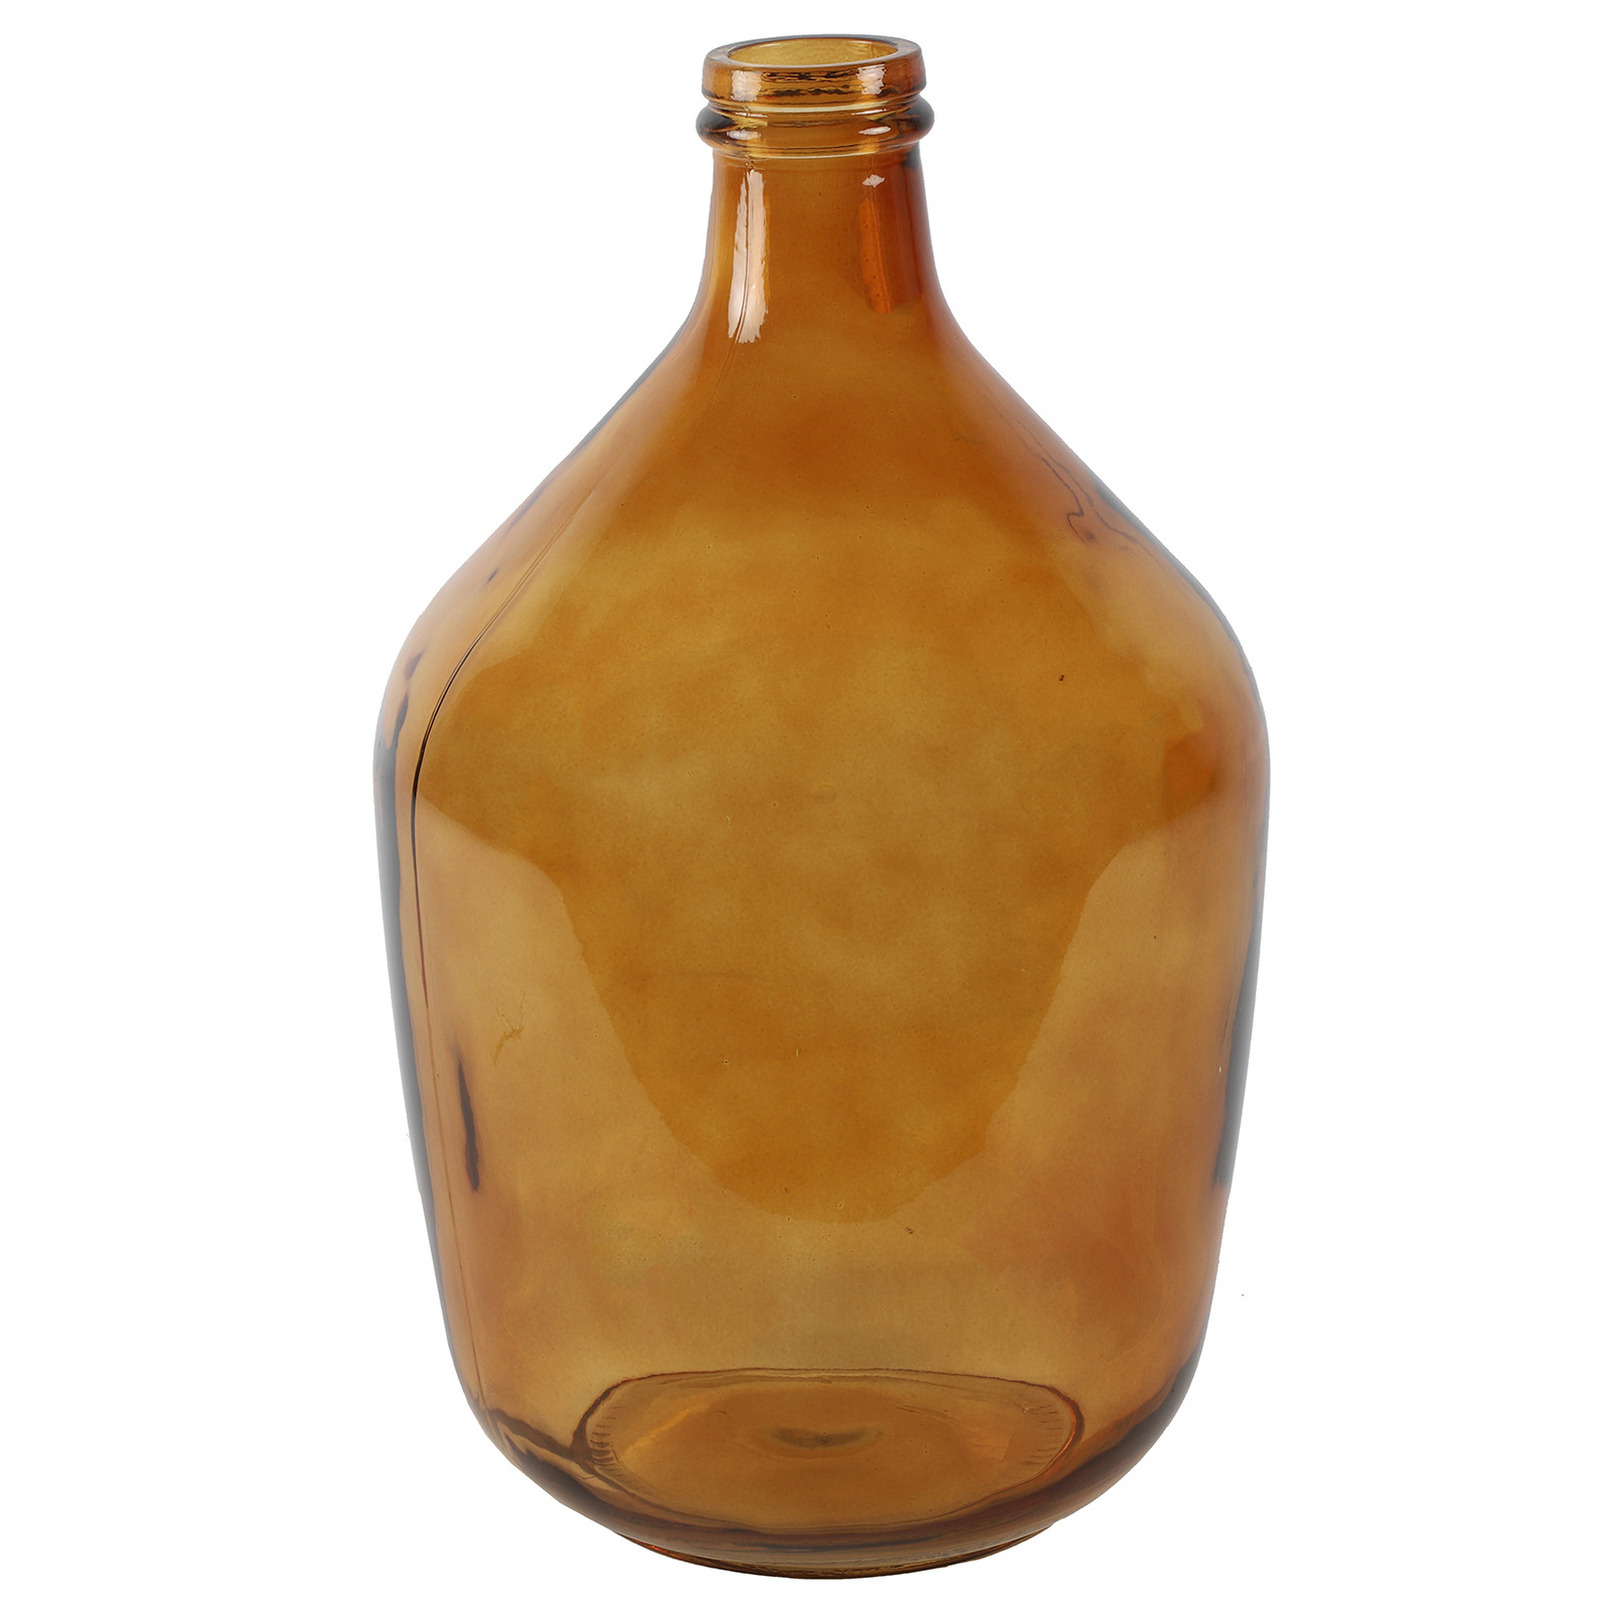 Countryfield Vaas amber goud-geel transparant glas XL fles vorm D23 x H38 cm